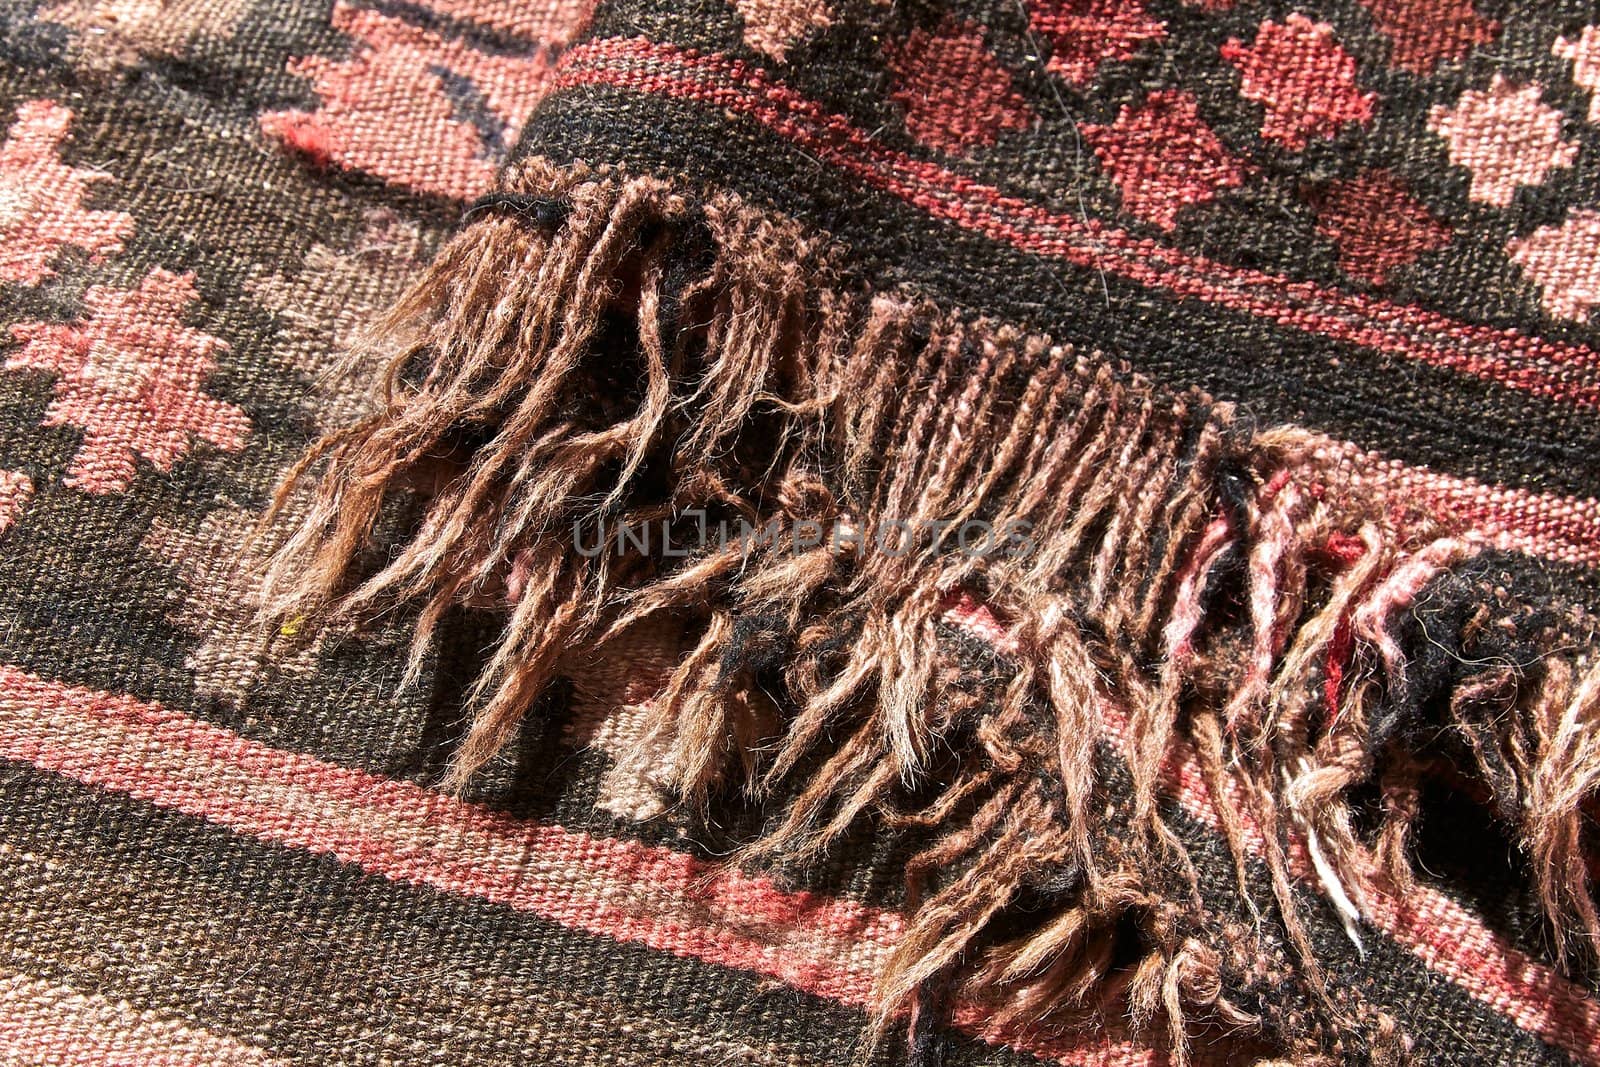 Carpet, close up view